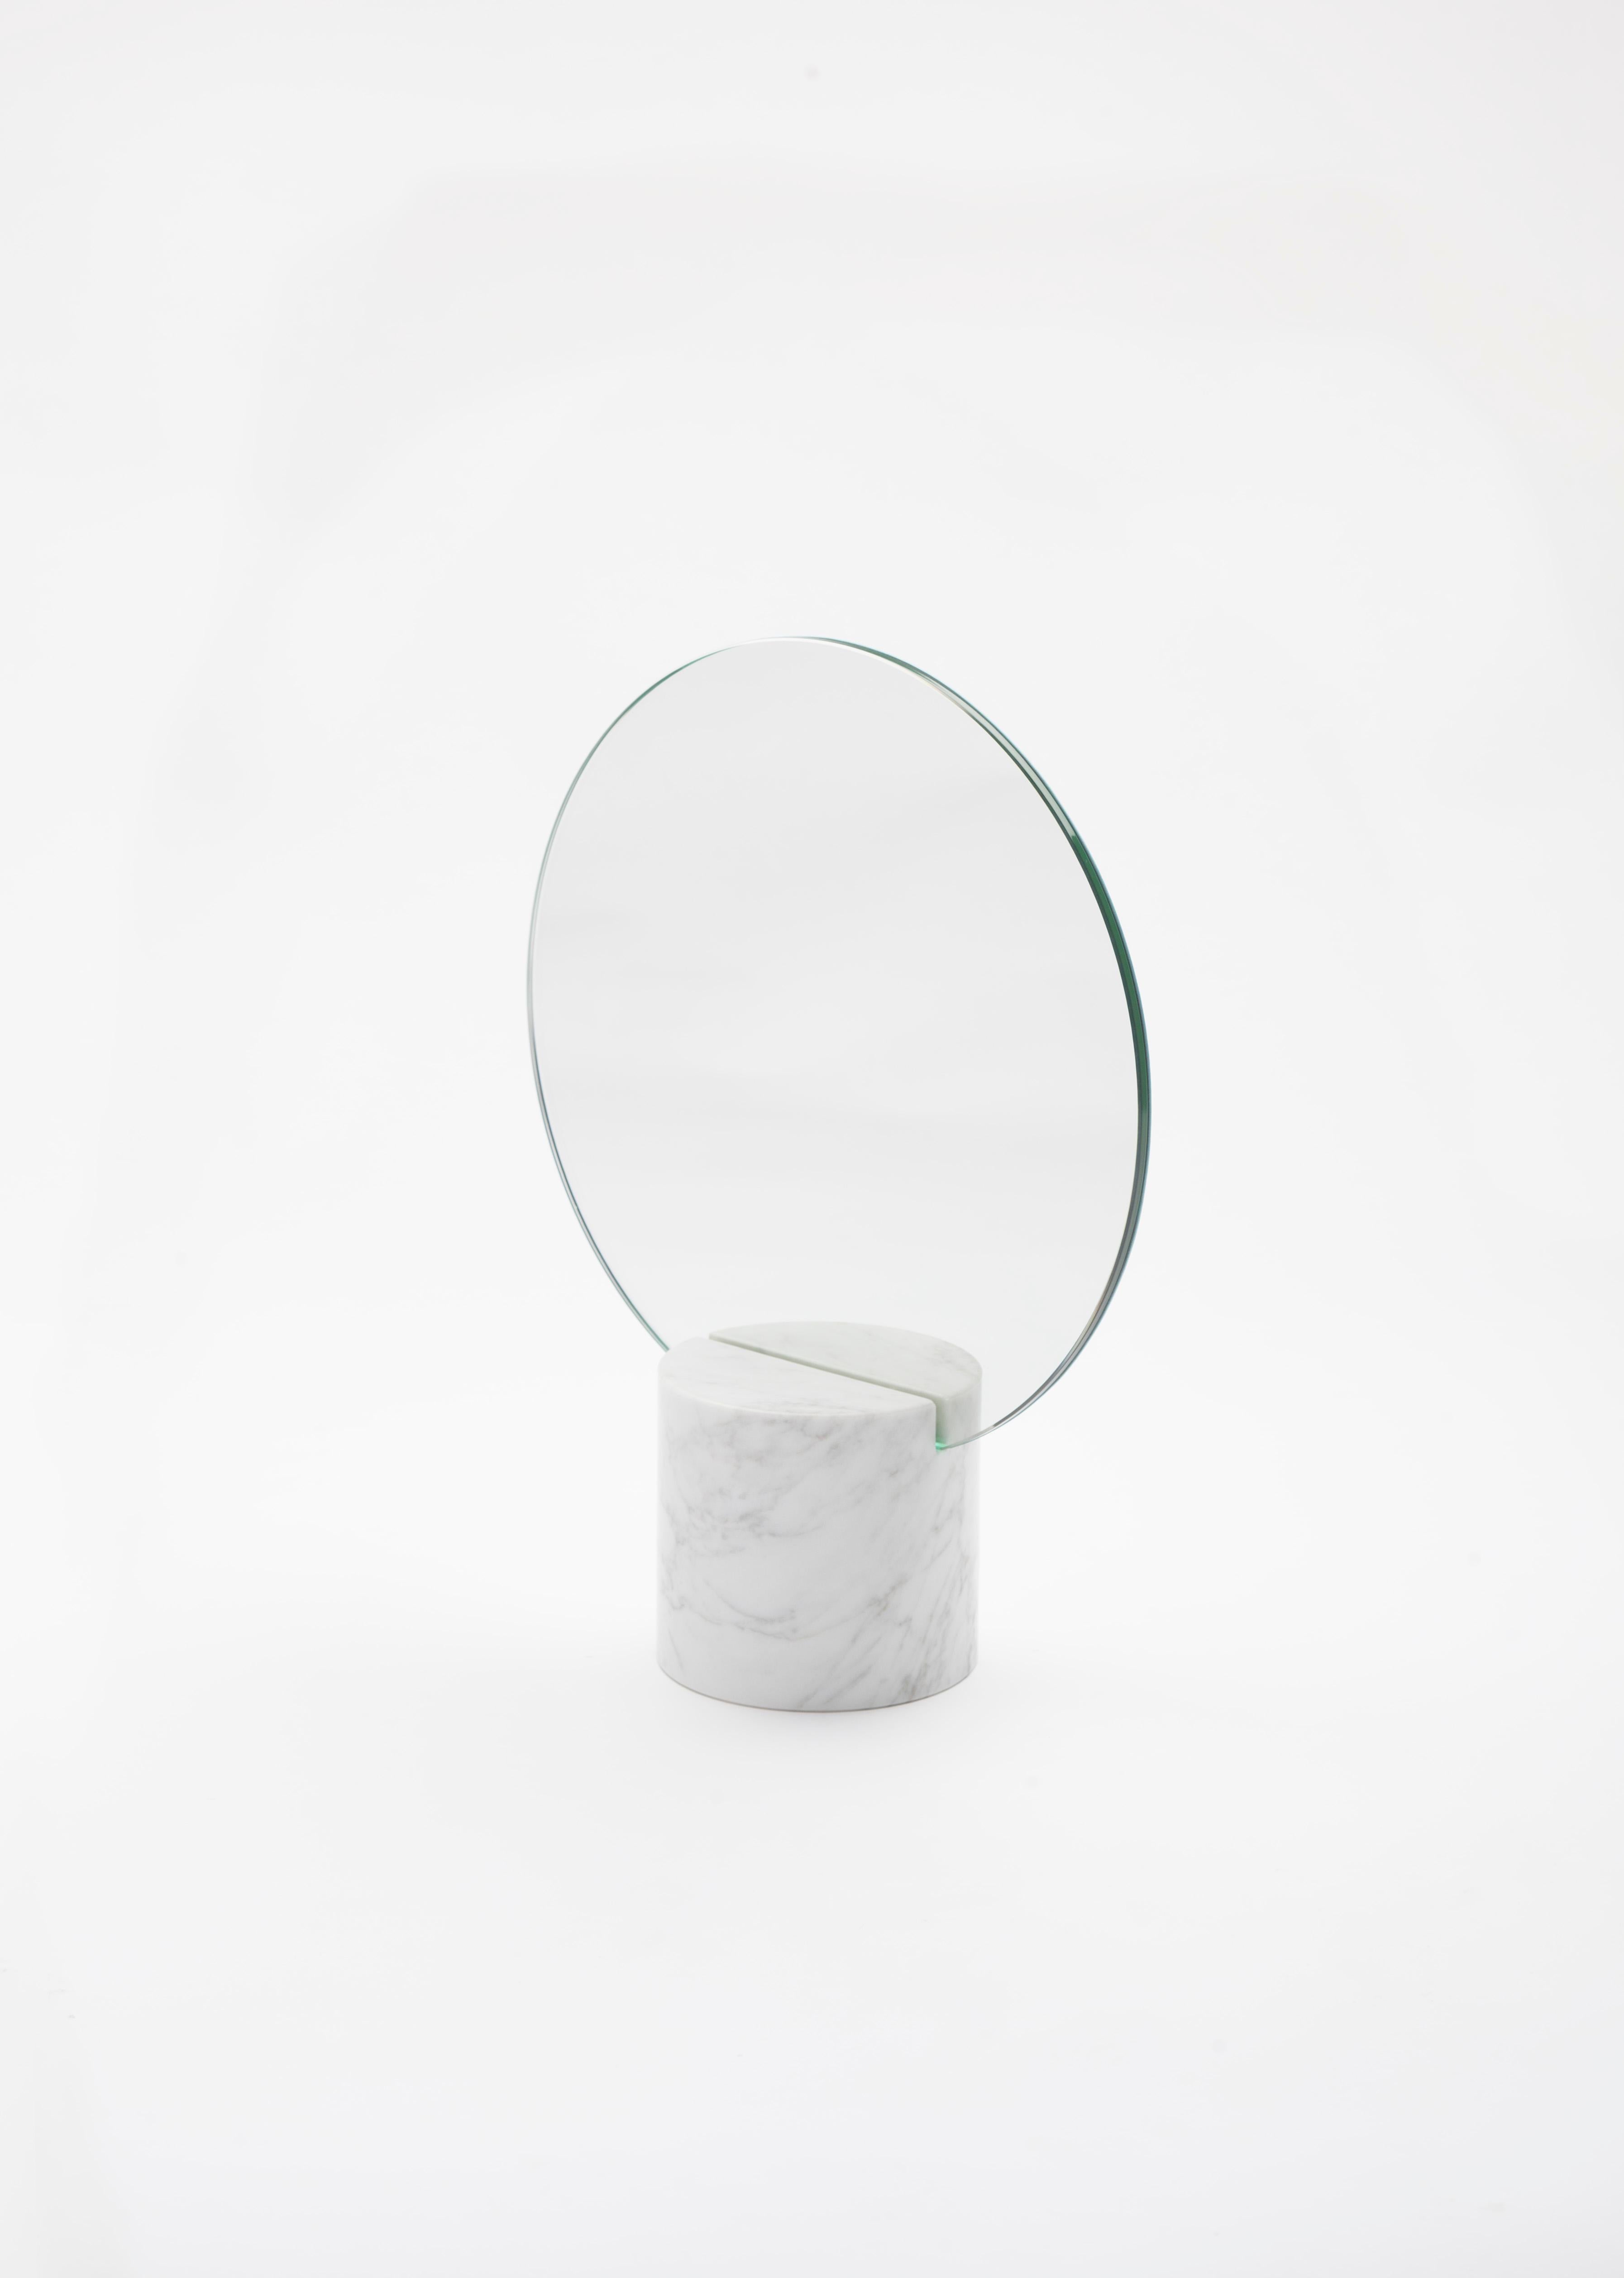 Sun Marble Mirror by Joseph Vila Capdevila In New Condition For Sale In Geneve, CH